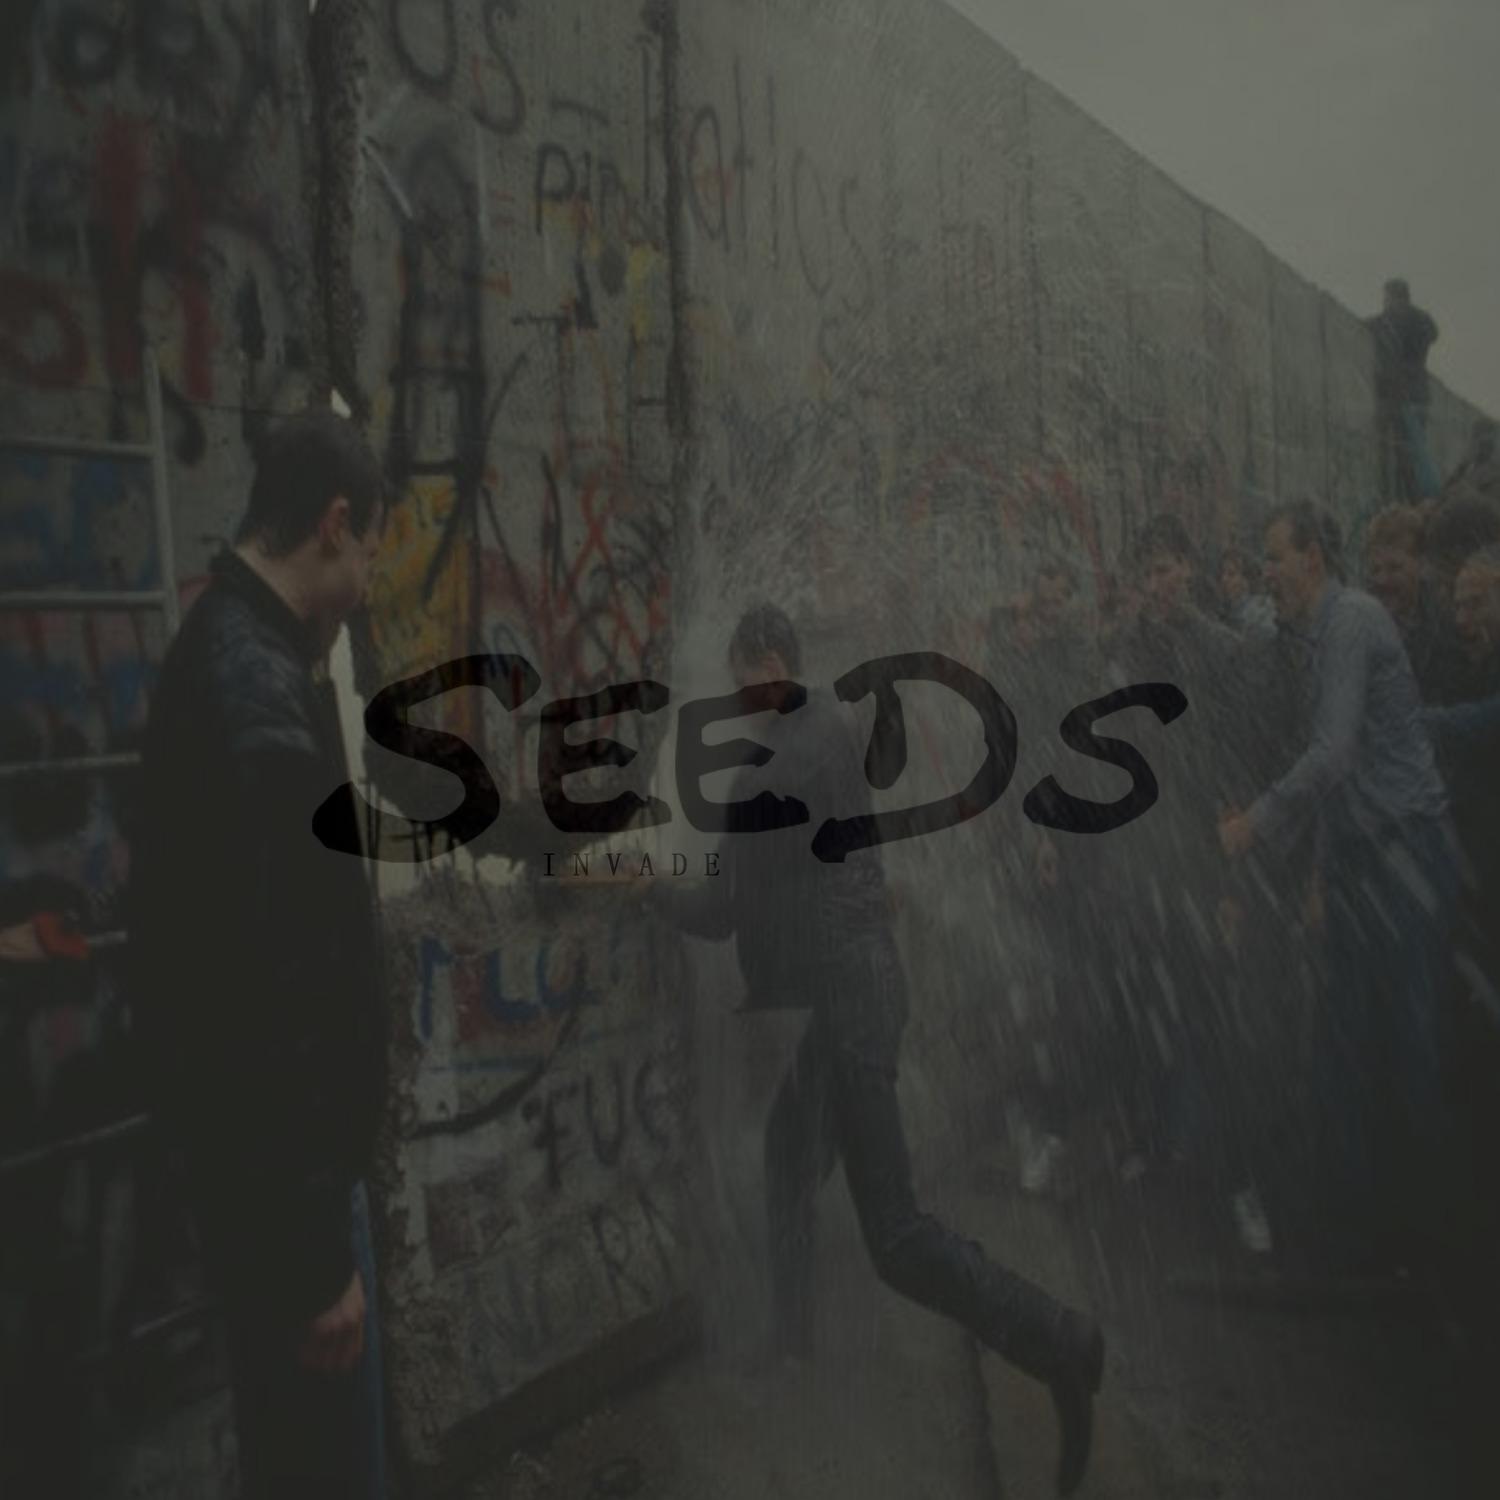 Seeds - Said Enough (Time to Act)